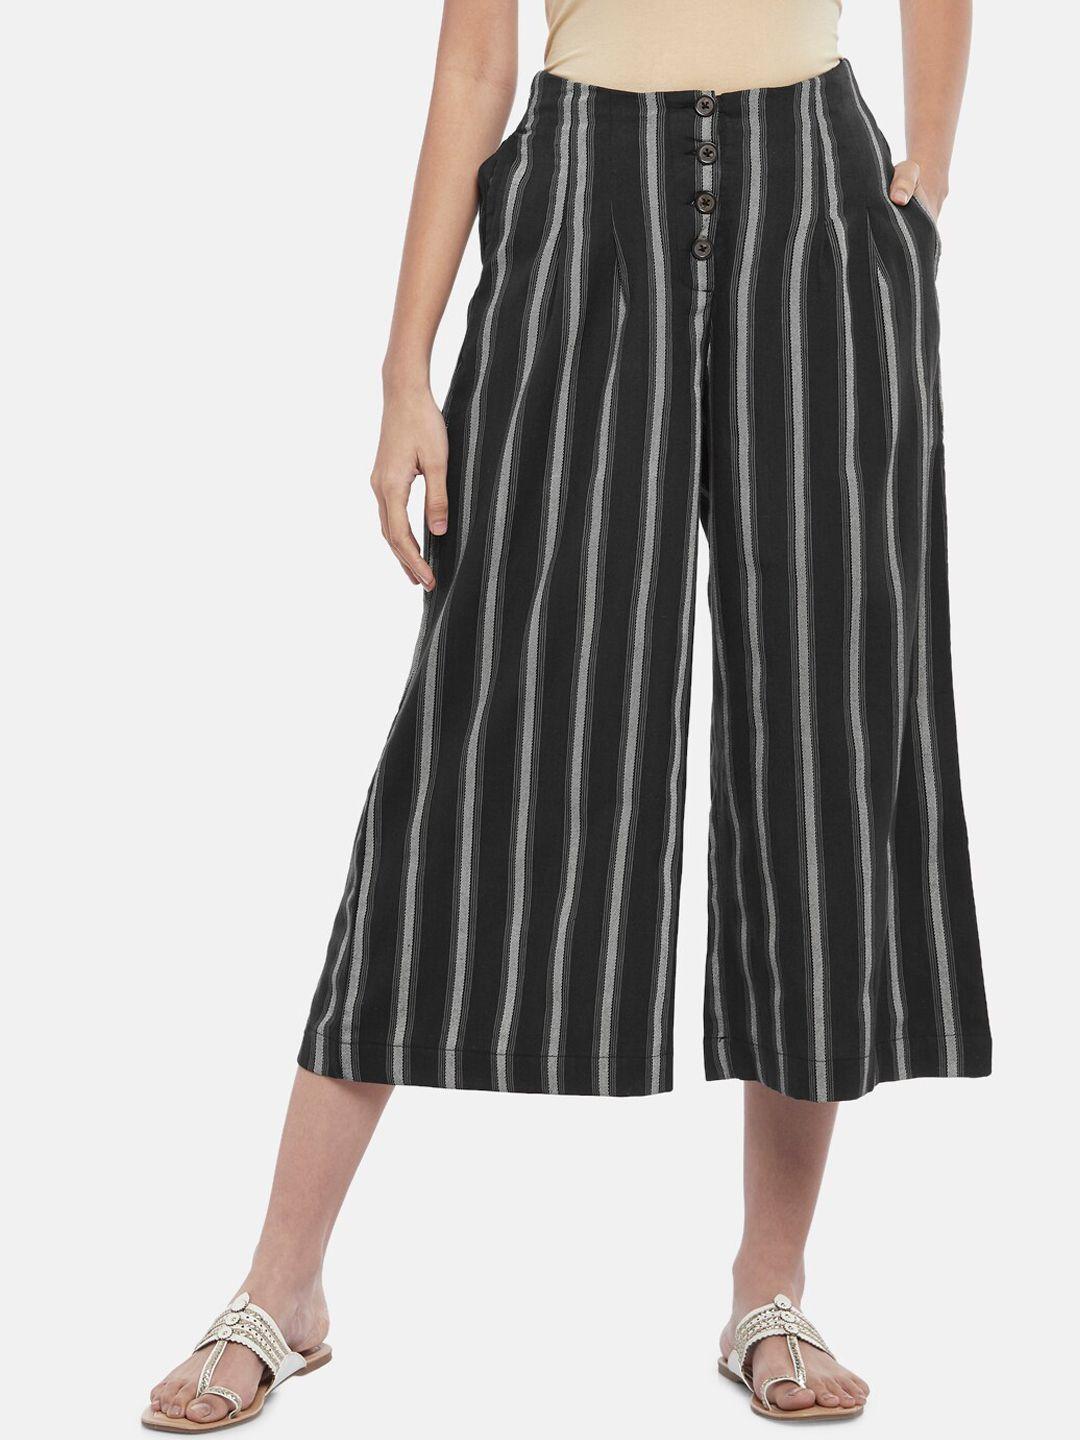 akkriti by pantaloons women black striped culottes trousers